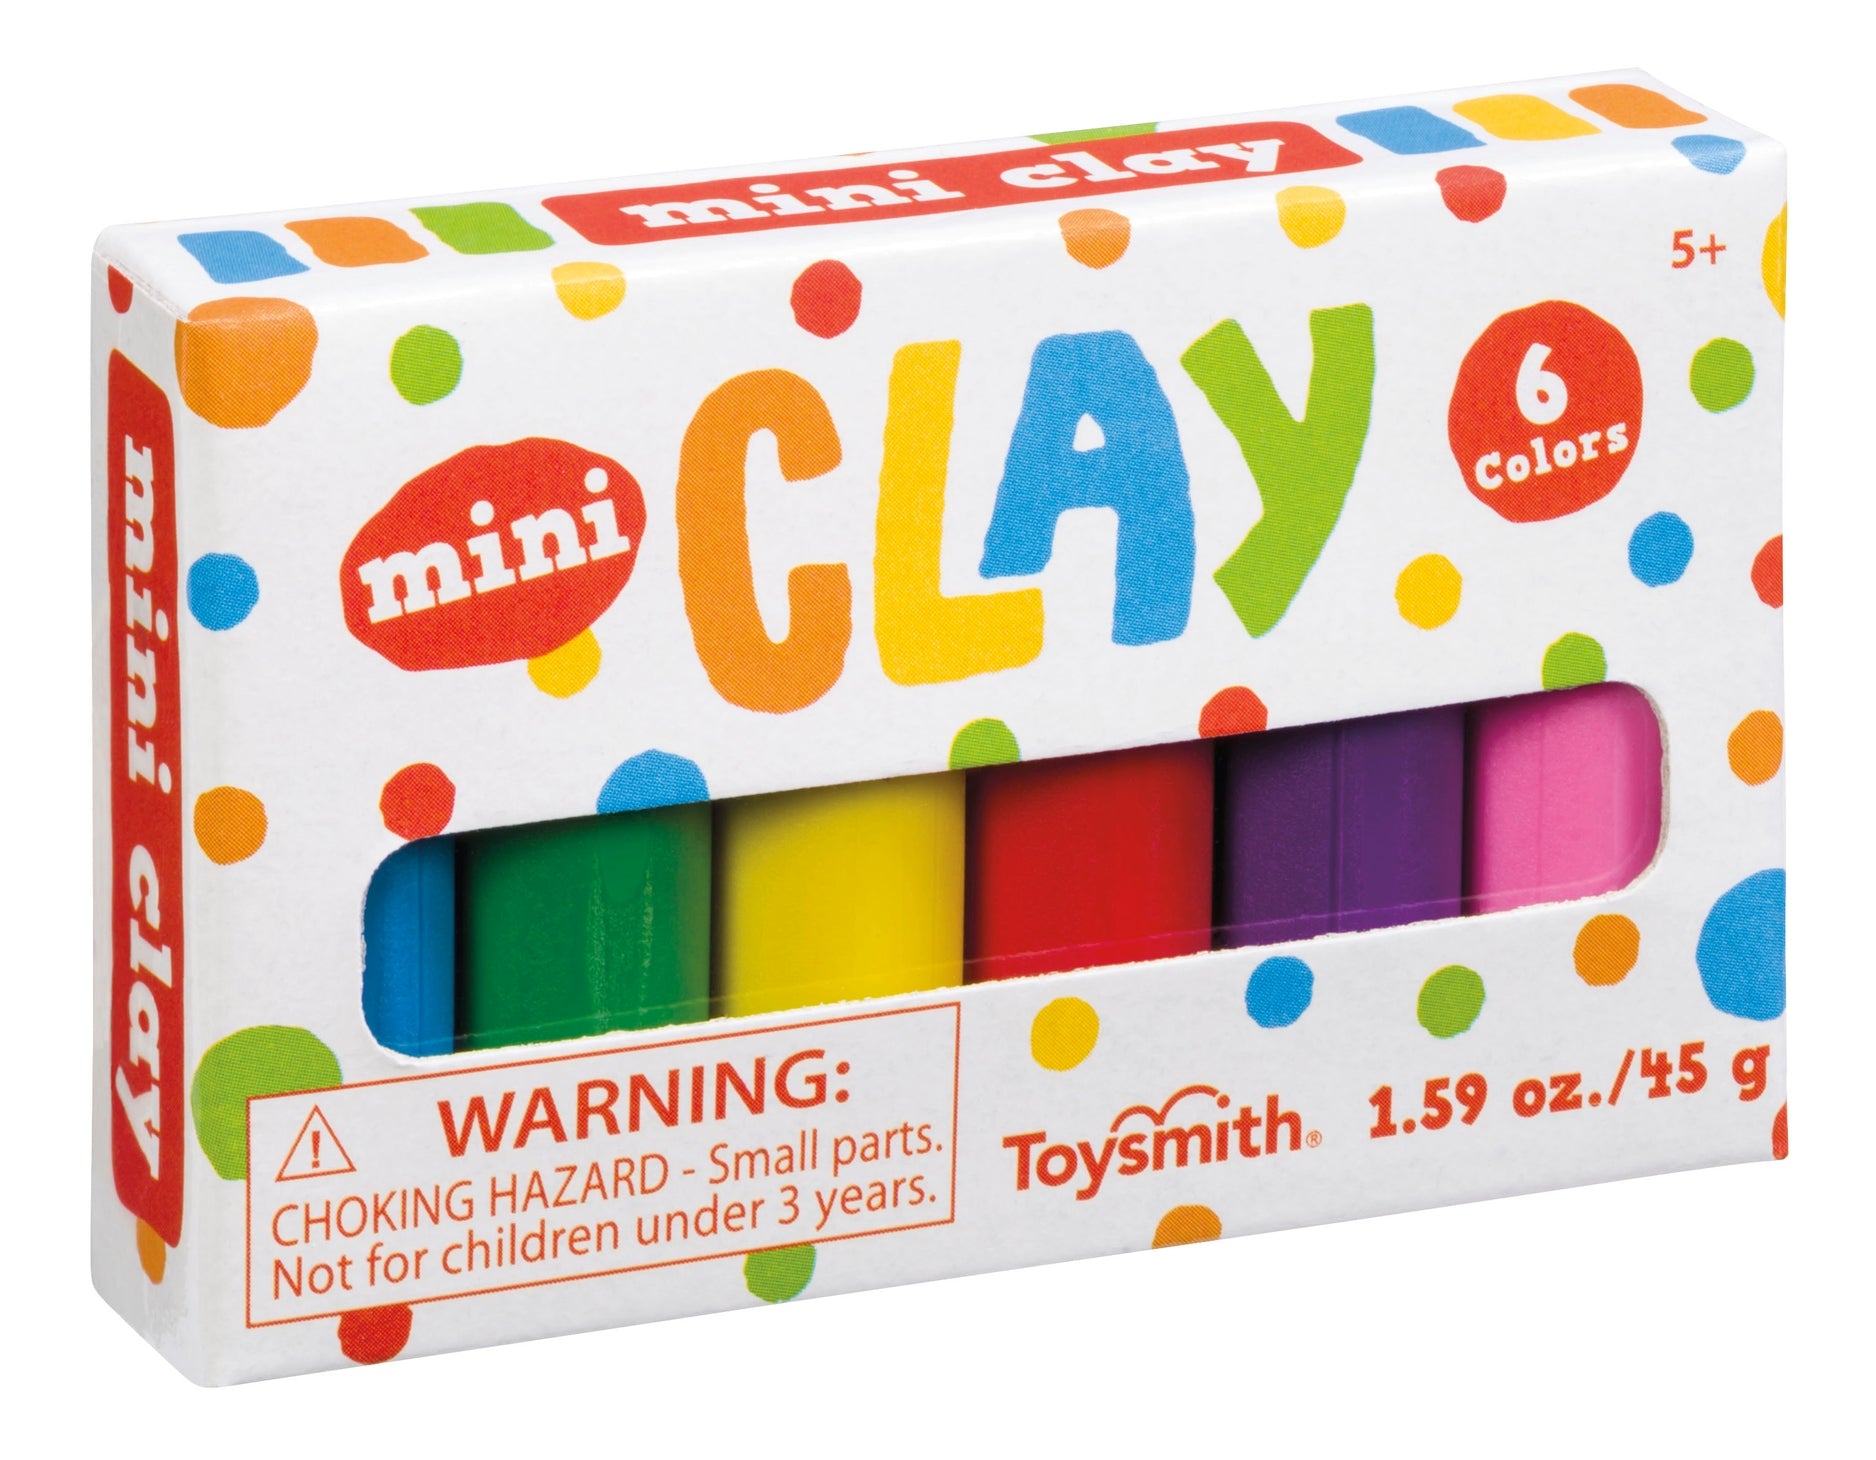 Toysmith Mini Clay Pack of 6